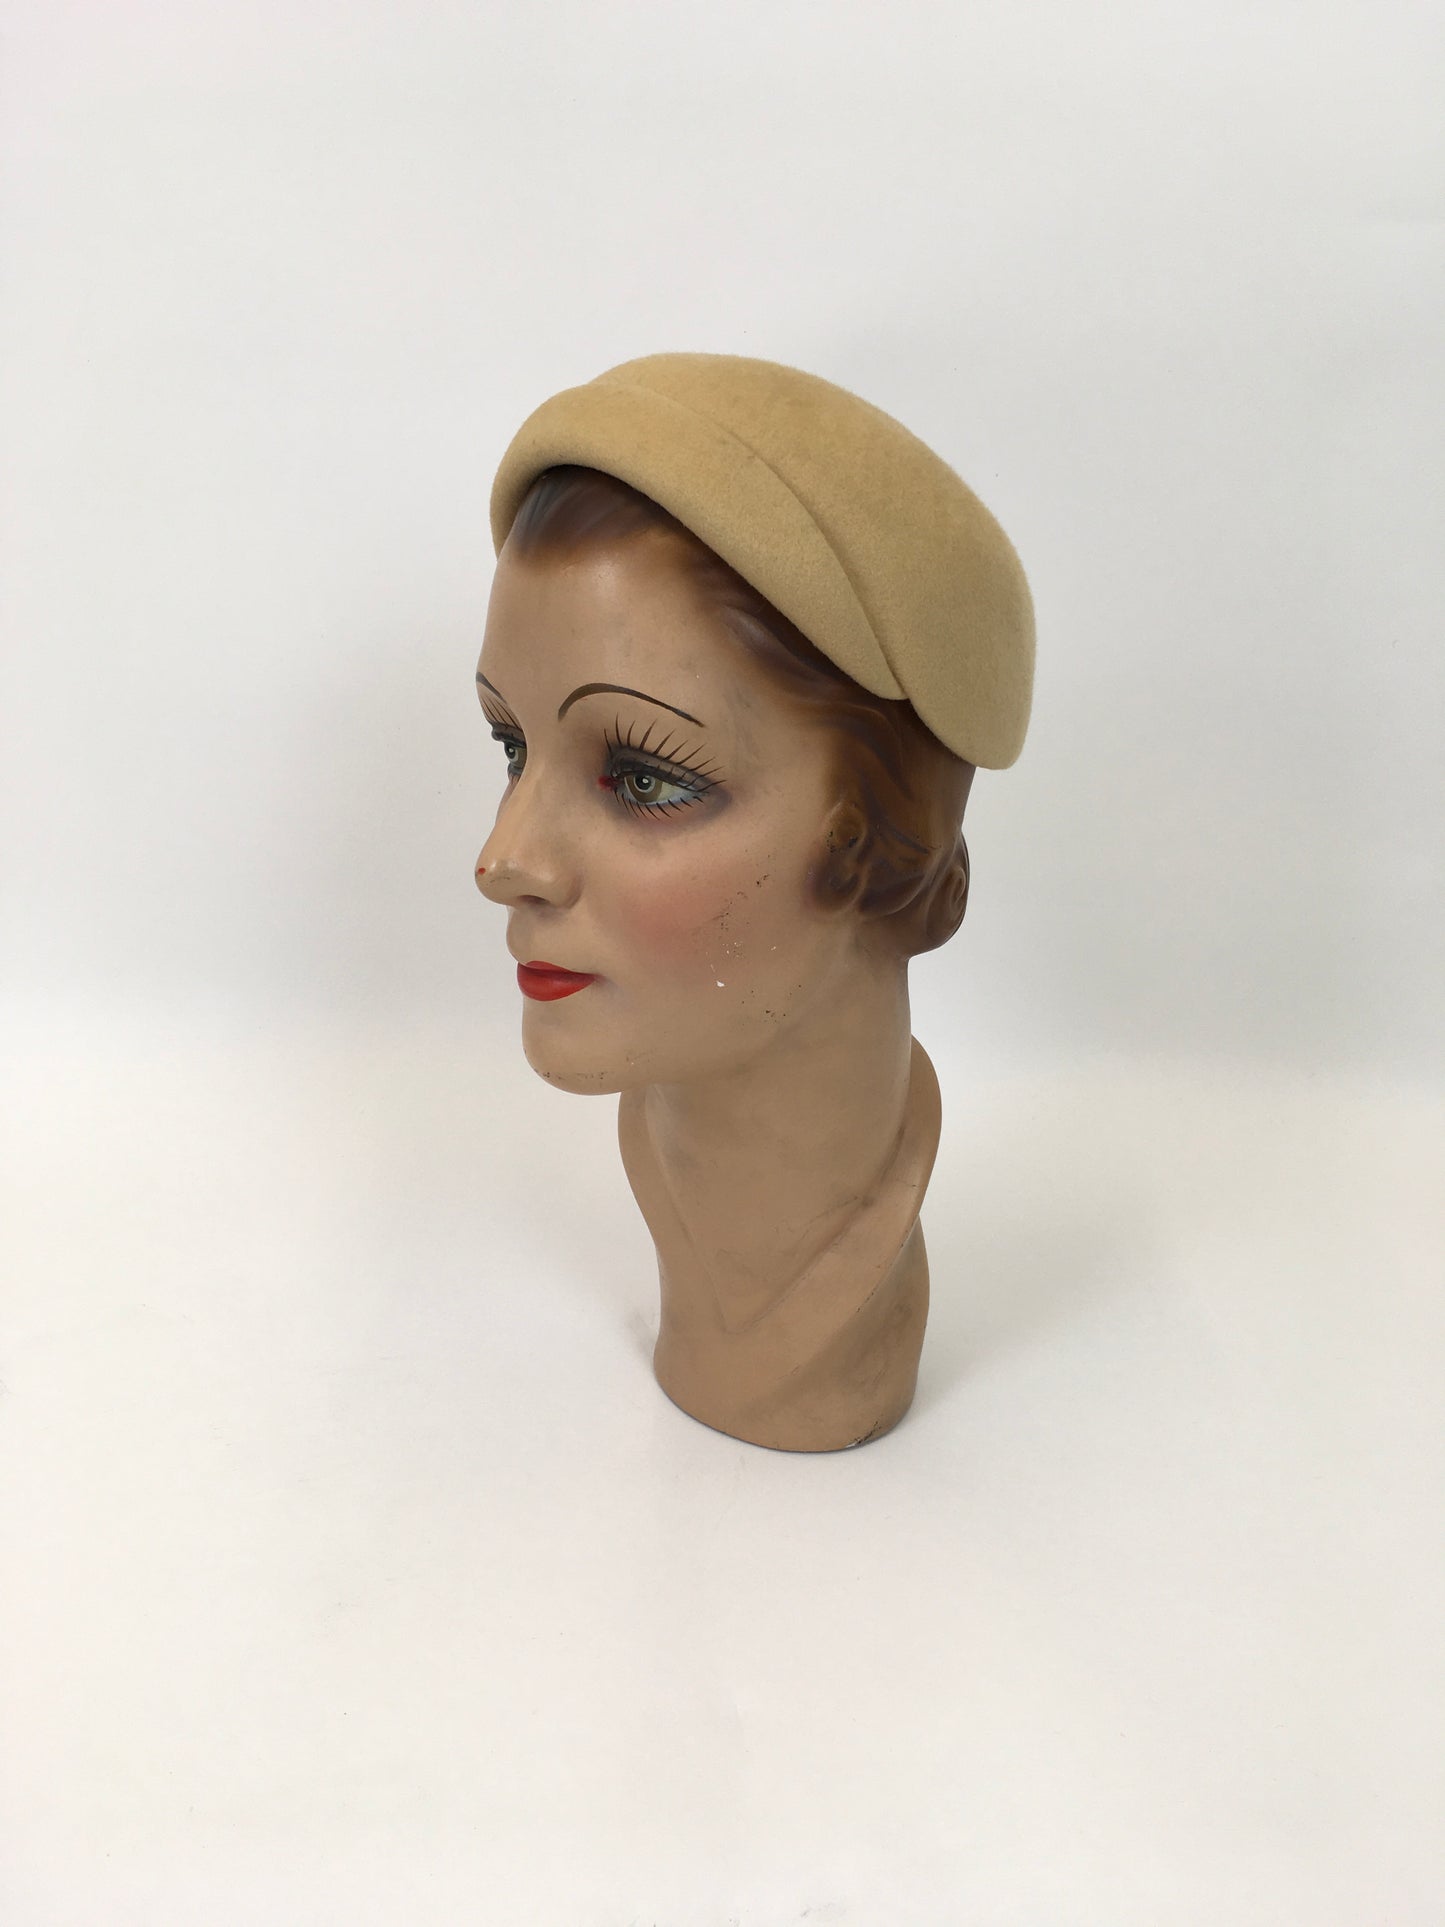 Original Late 1940’s Early 1950’s Felt Headpiece - In Light Mustard